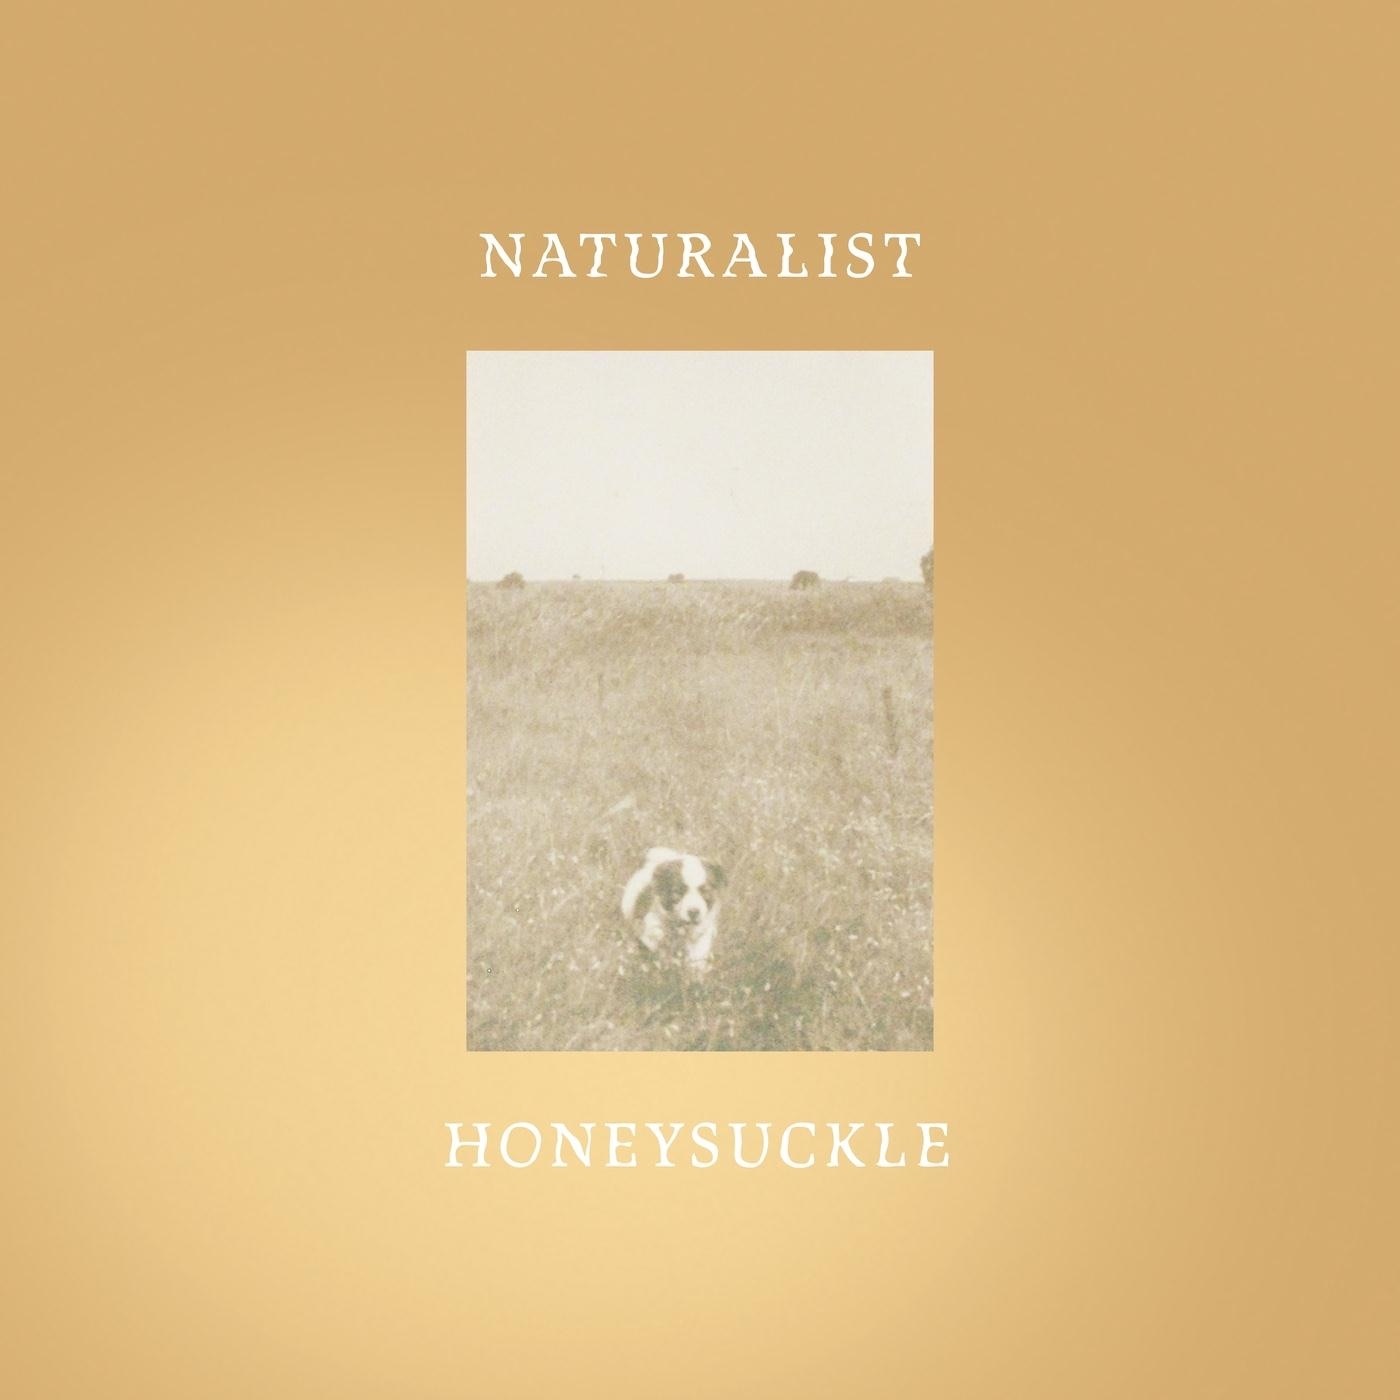 Honeysuckle by Naturalist